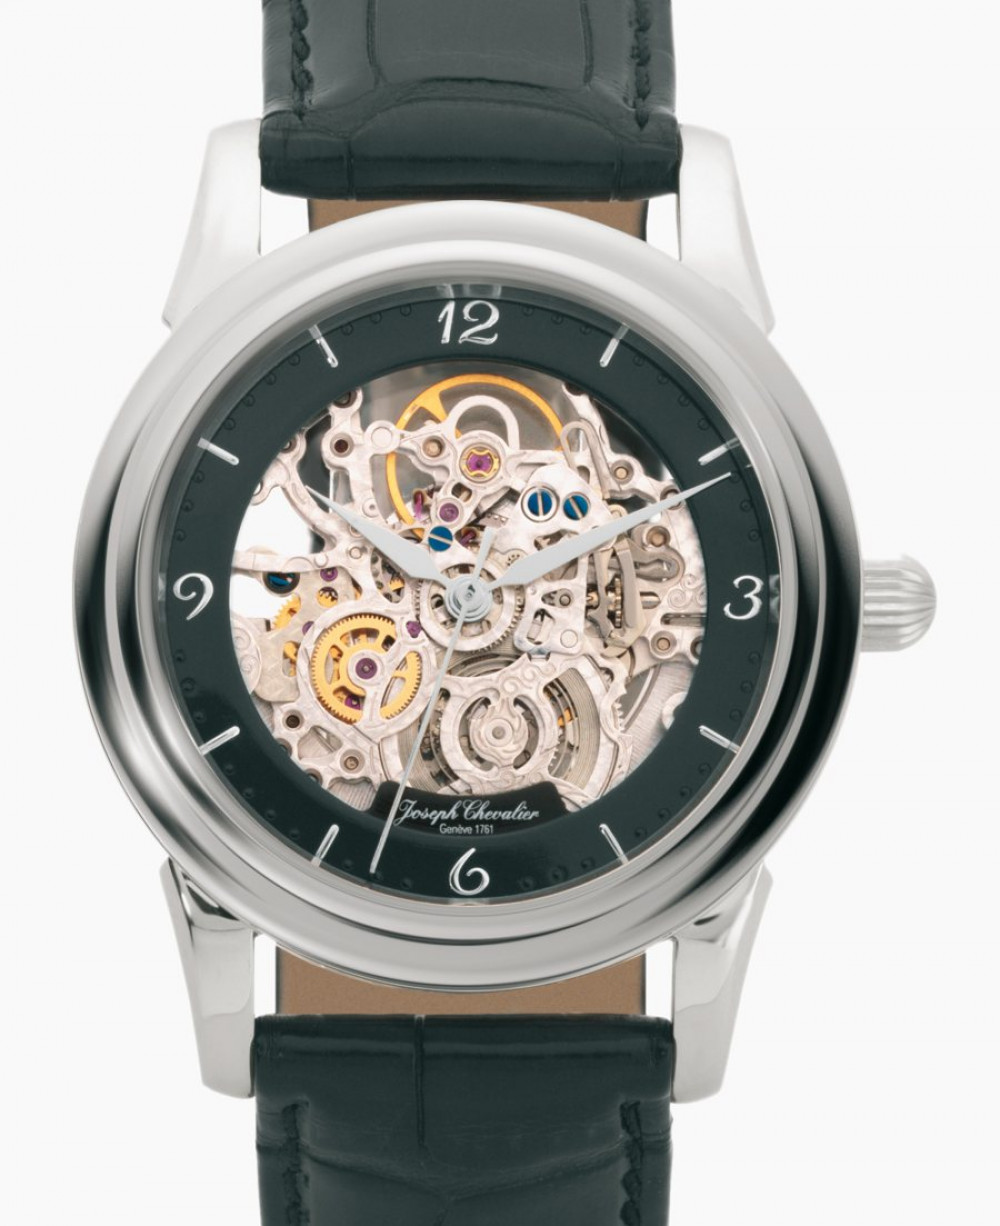 Zegarek firmy Joseph Chevalier, model Conte